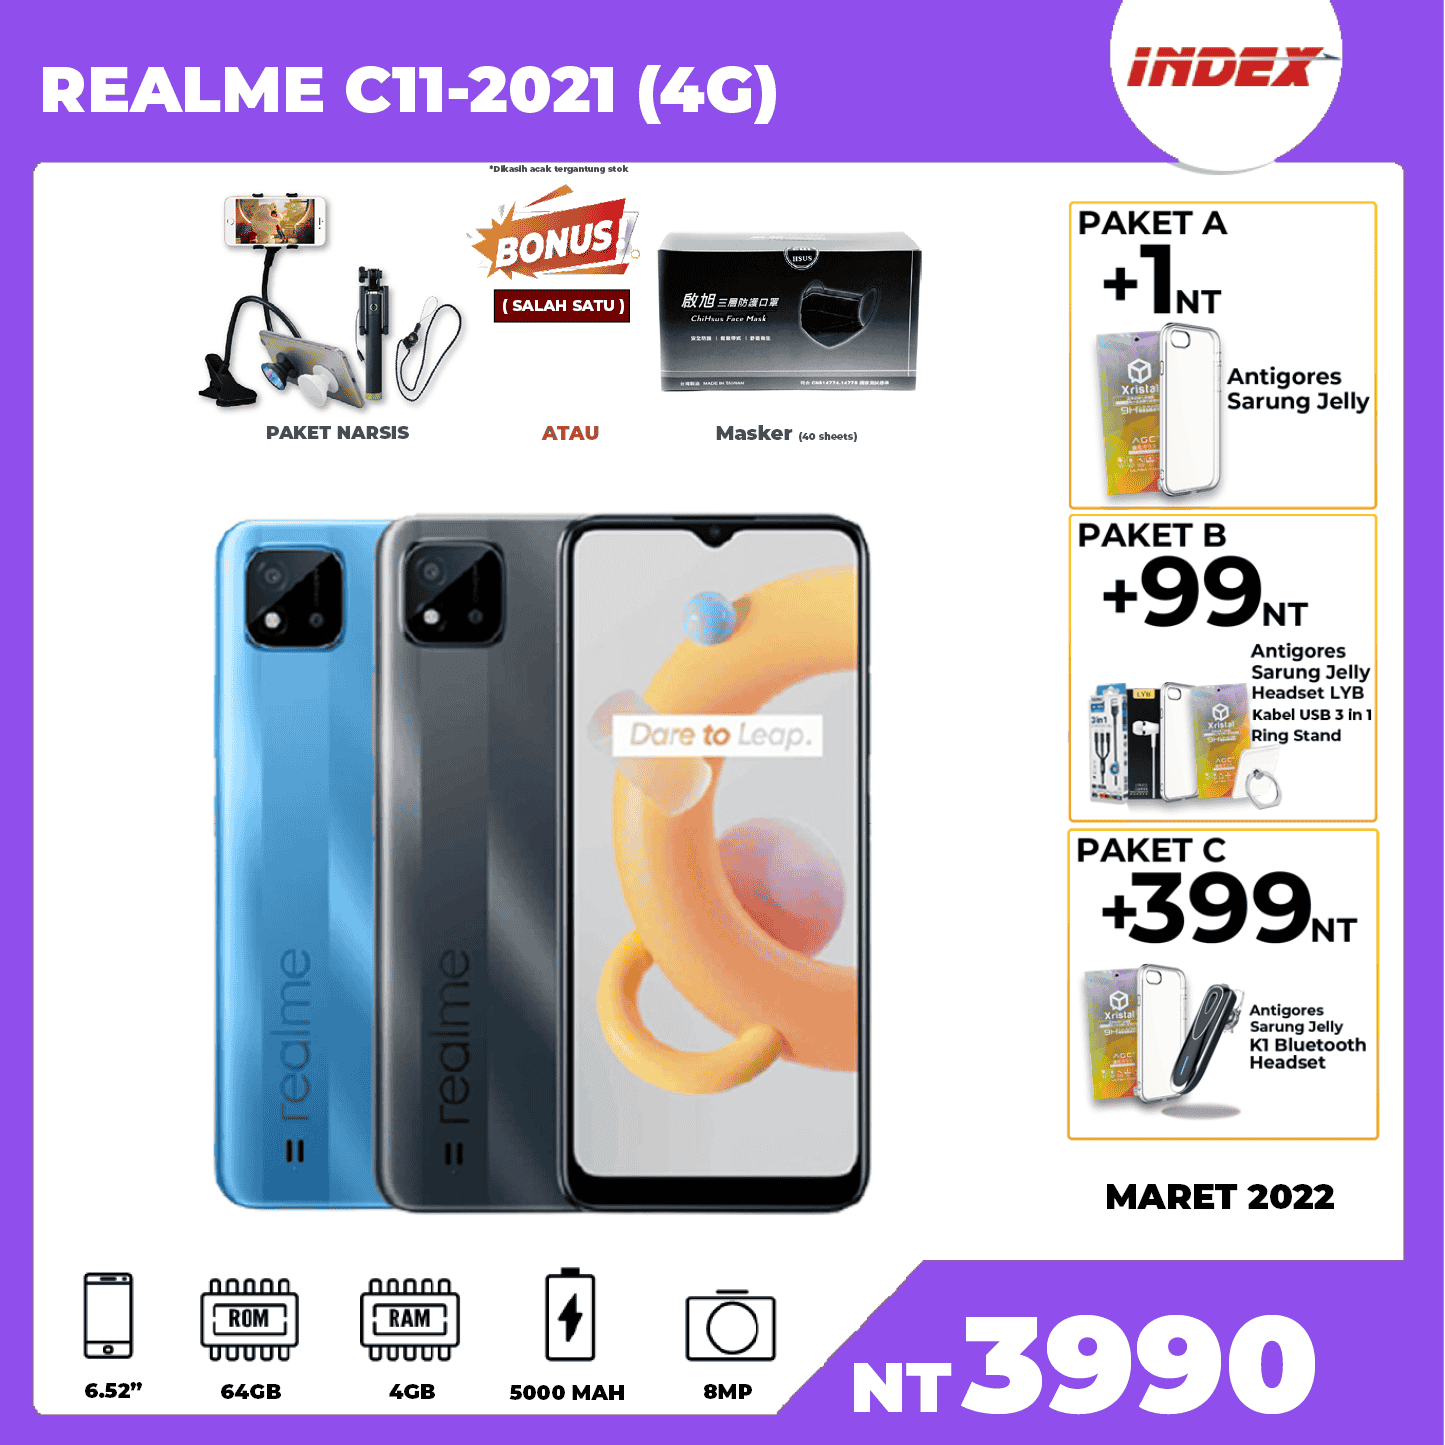 REALME C11-2021 (4G) 4GB/64GB